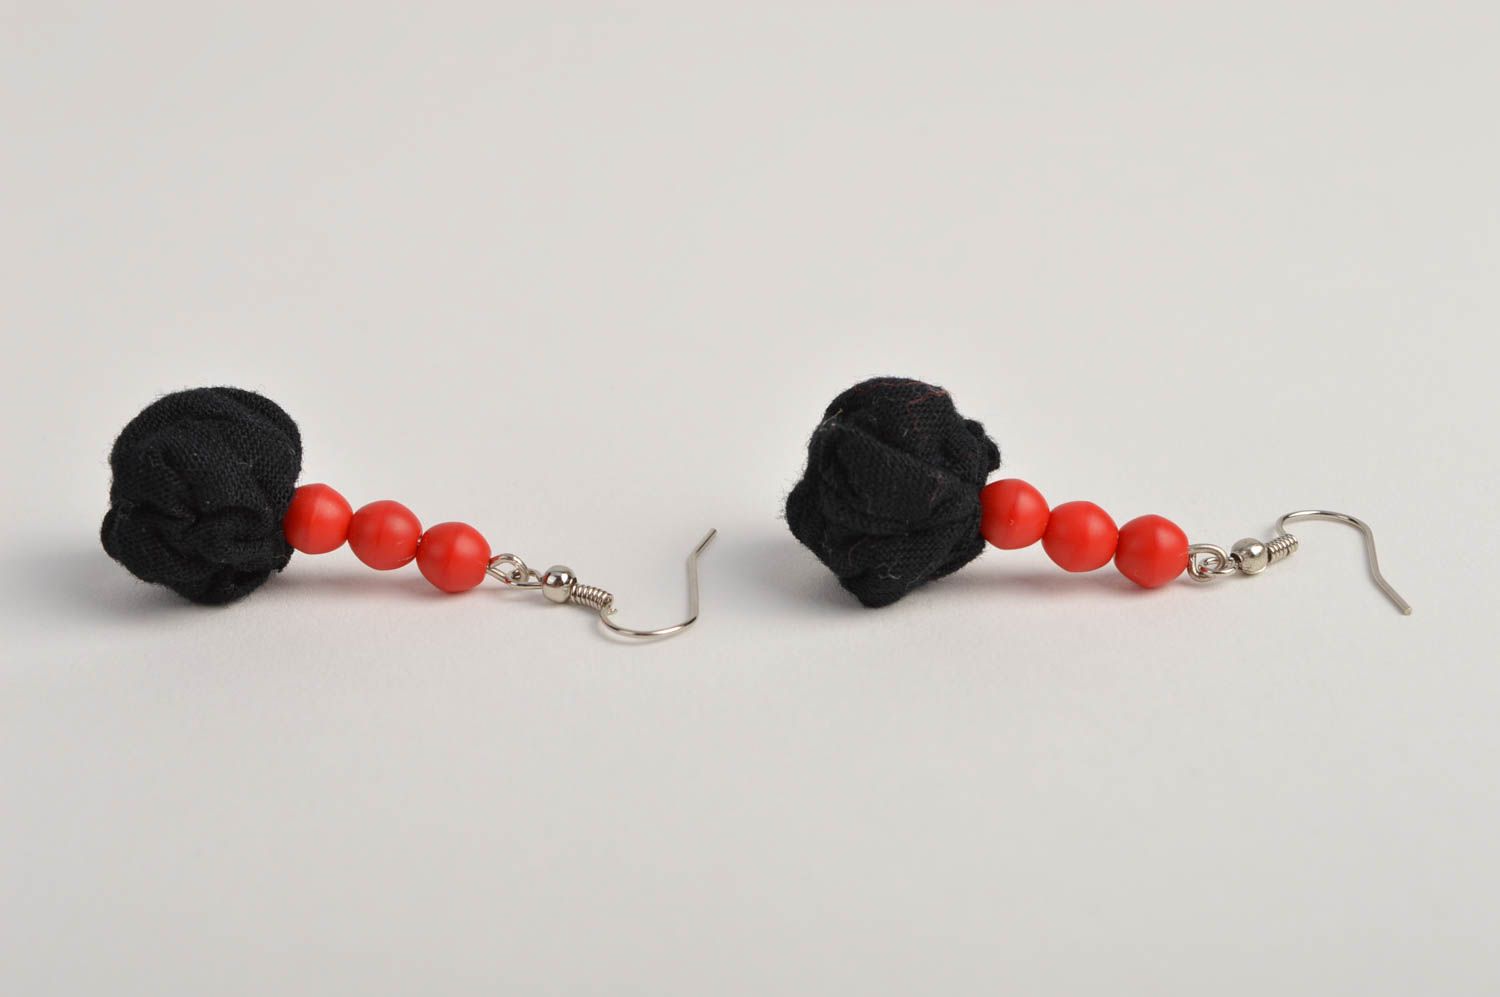 Handmade stylish earrings textile black earrings elegant evening jewelry photo 5